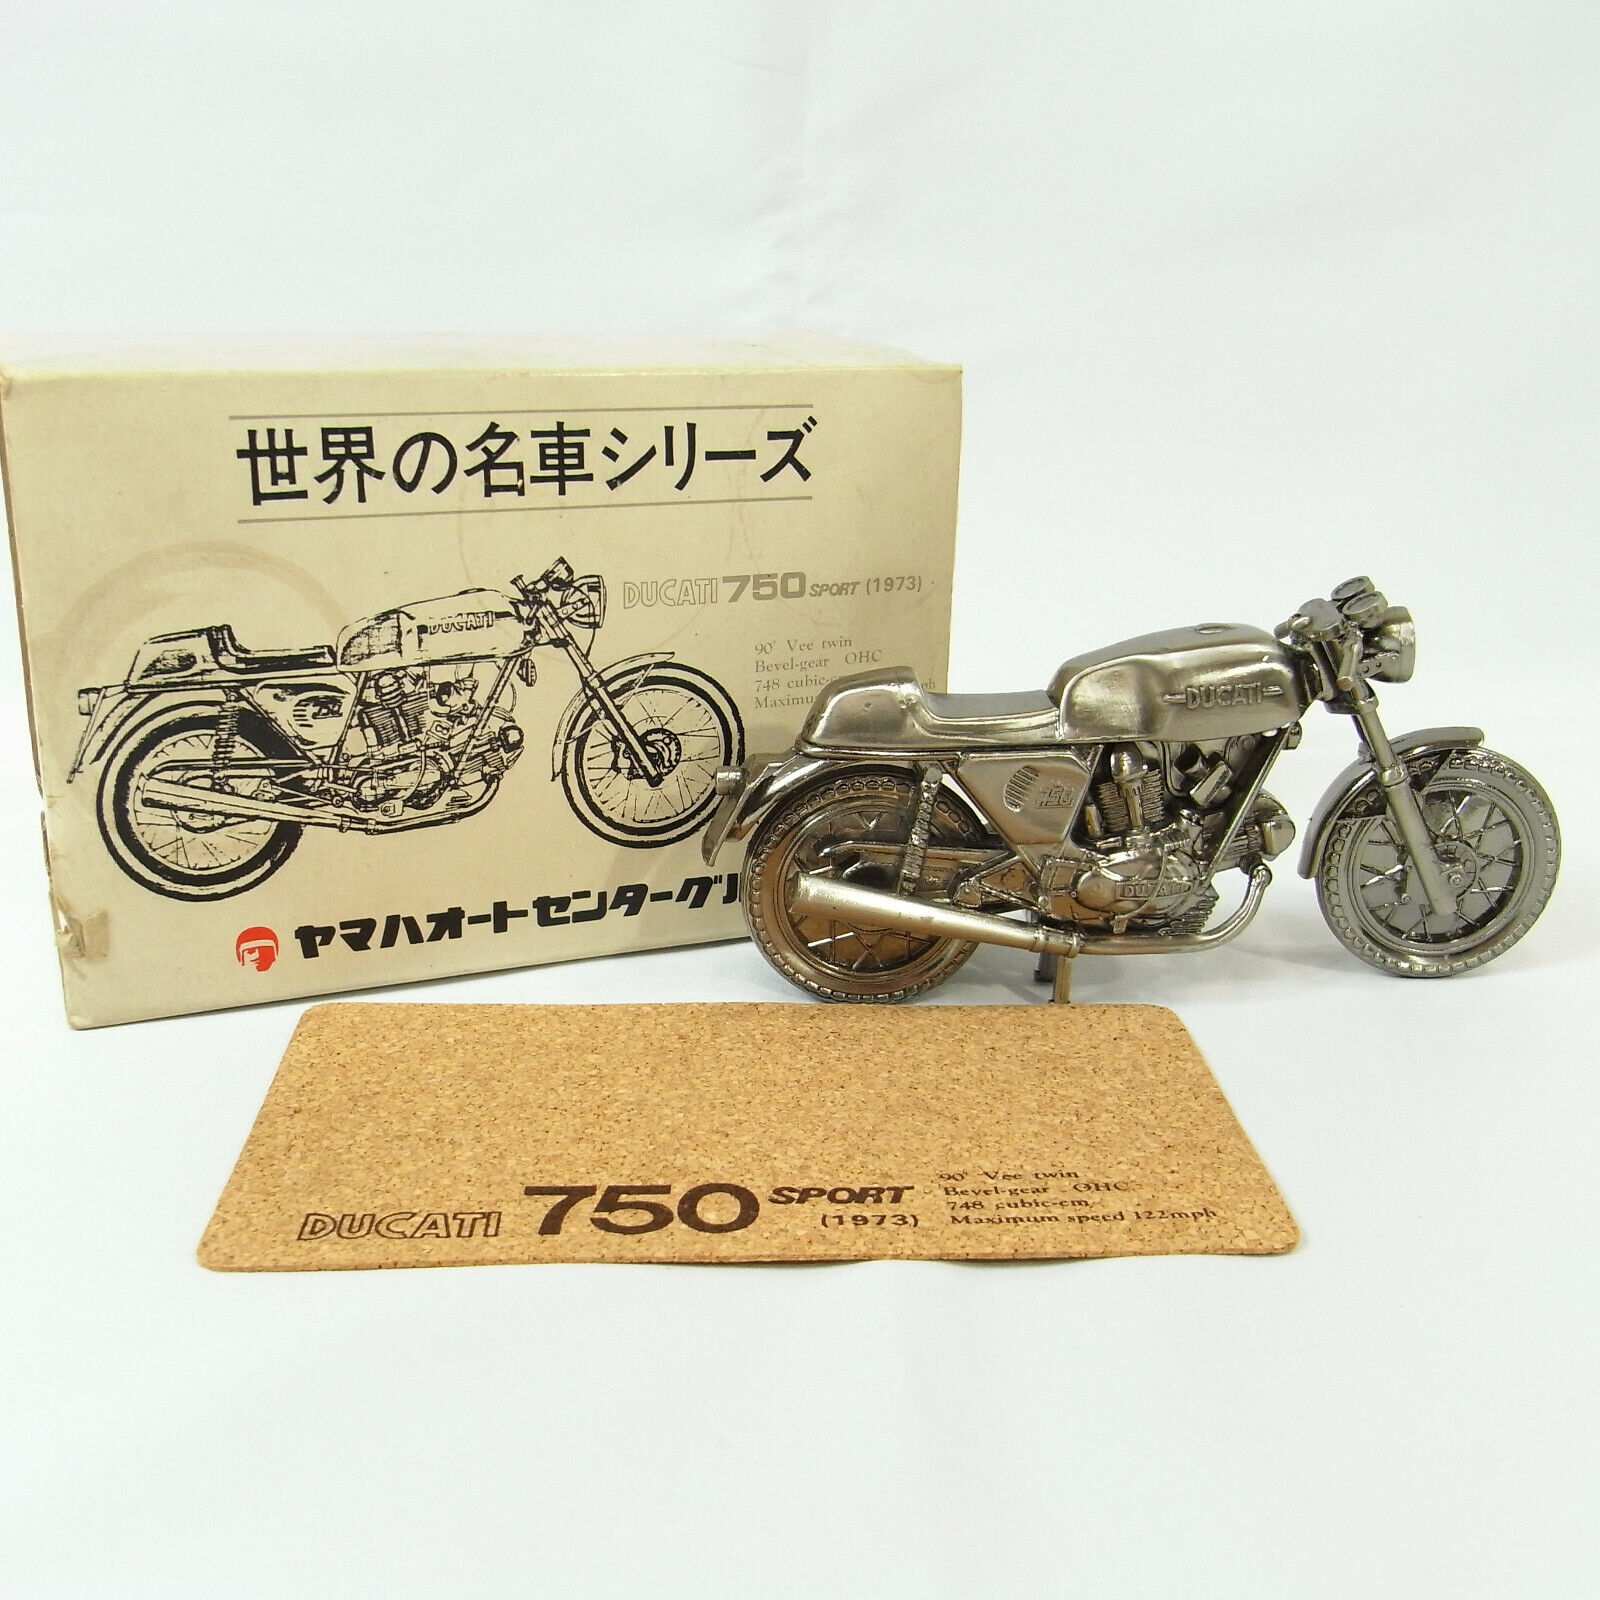 [MODEL] Ducati 750 sport 1973 diecast metal figure Japan